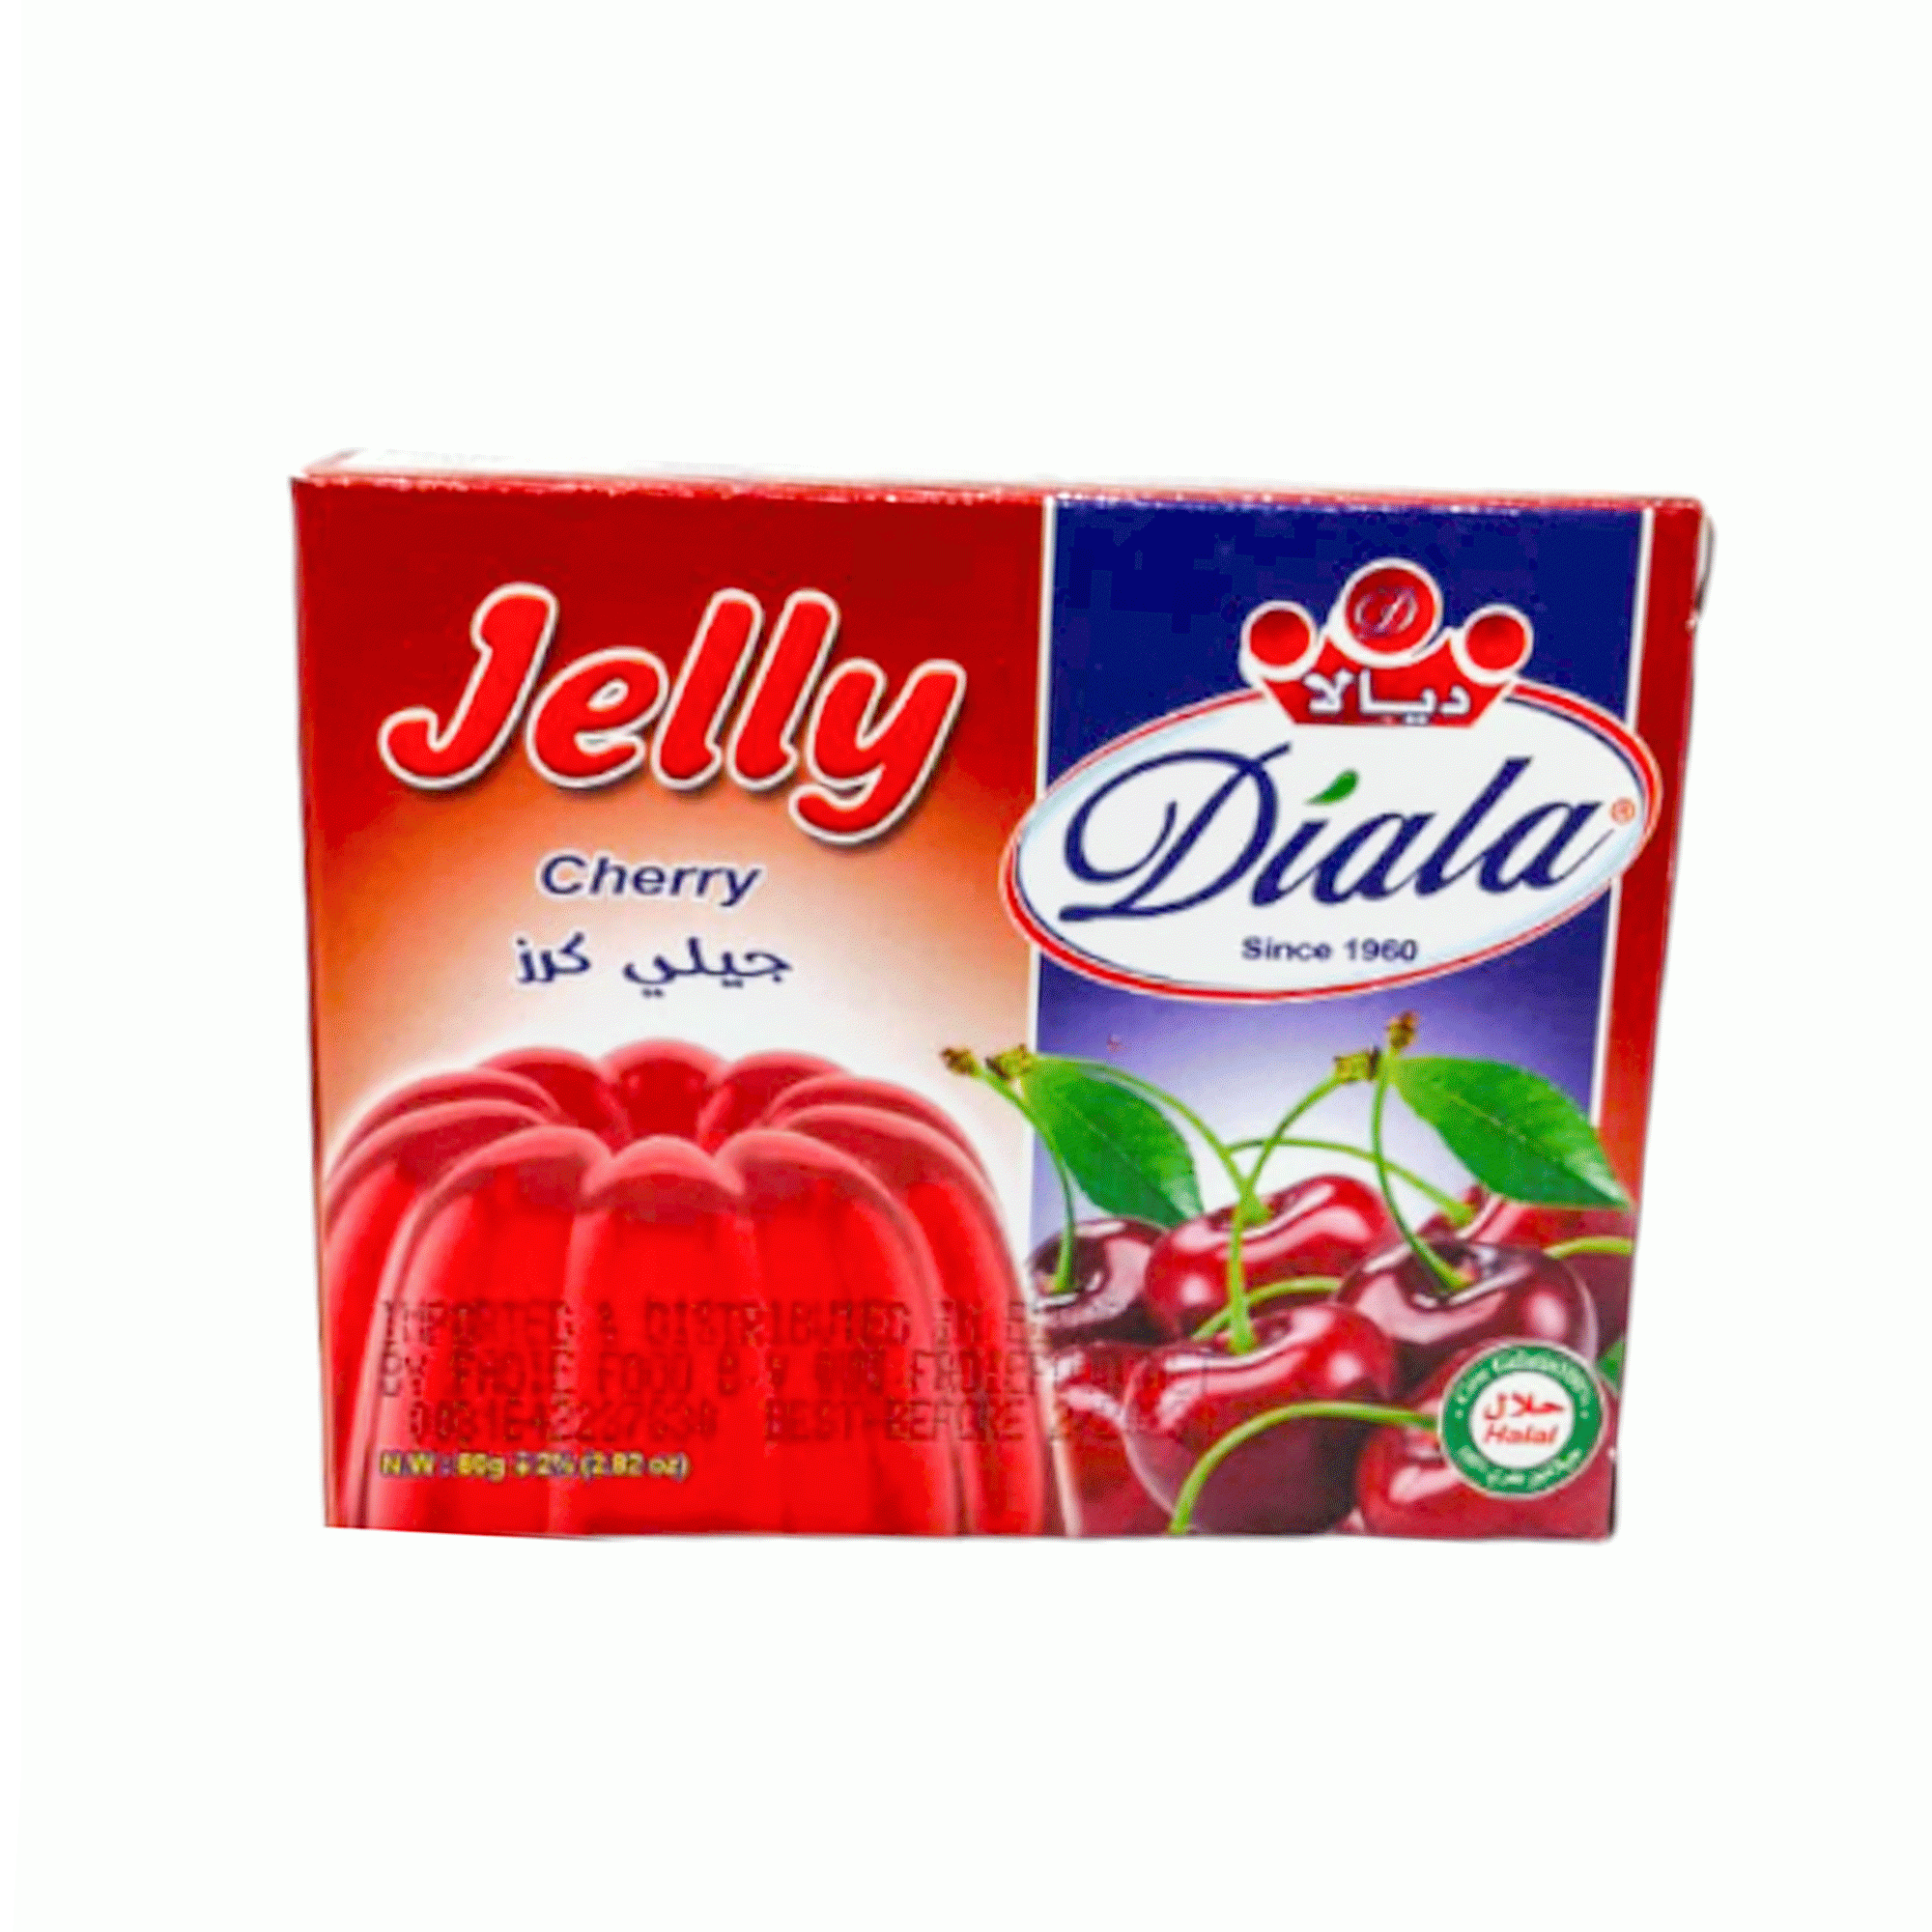 DIALA Jelly Cherry, 80g. 